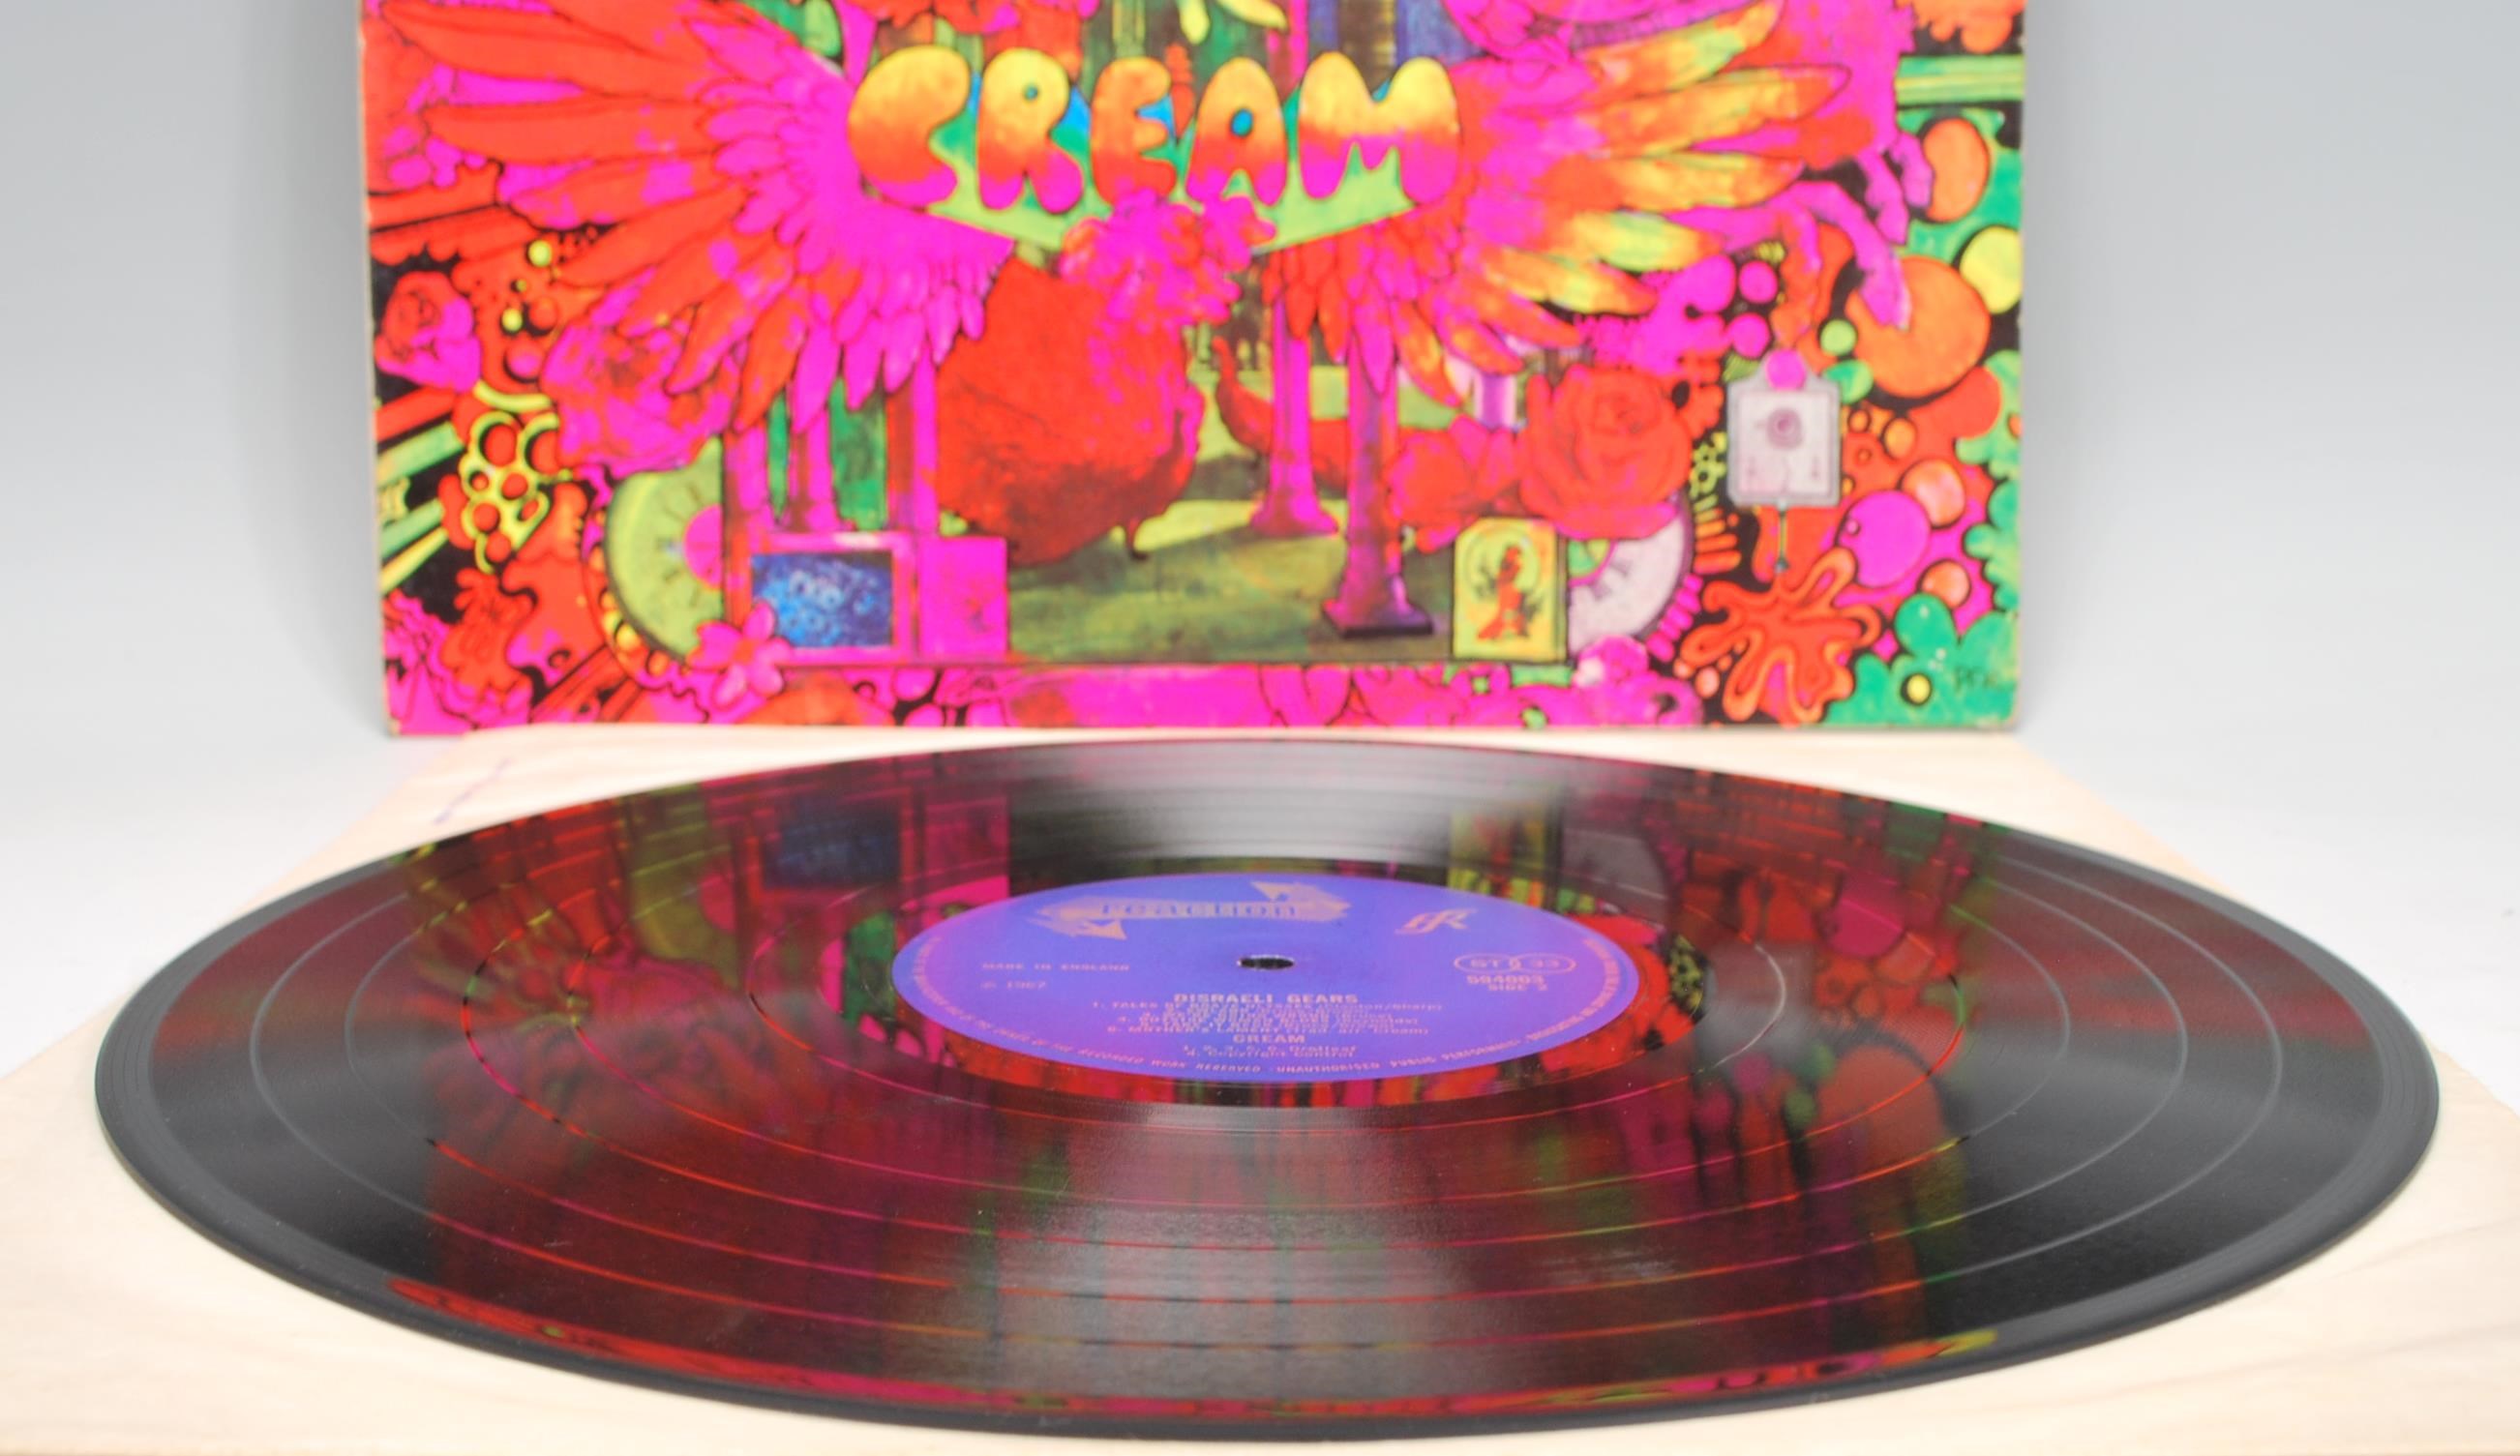 Vinyl long play LP record album by Cream – Disrael - Image 2 of 7